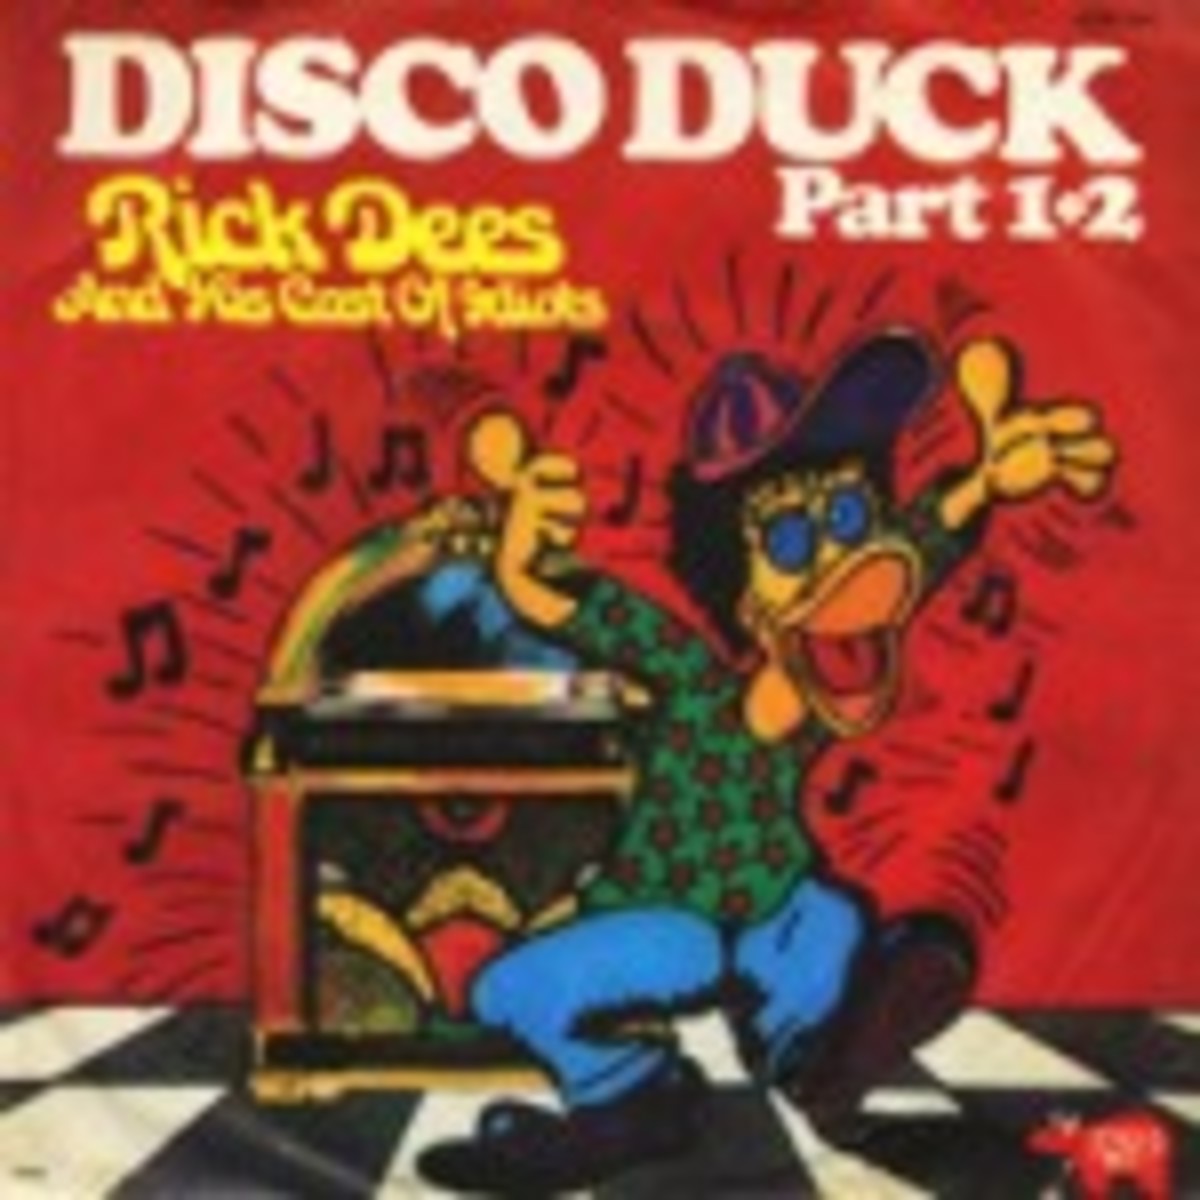 Rick Dees Disco Duck